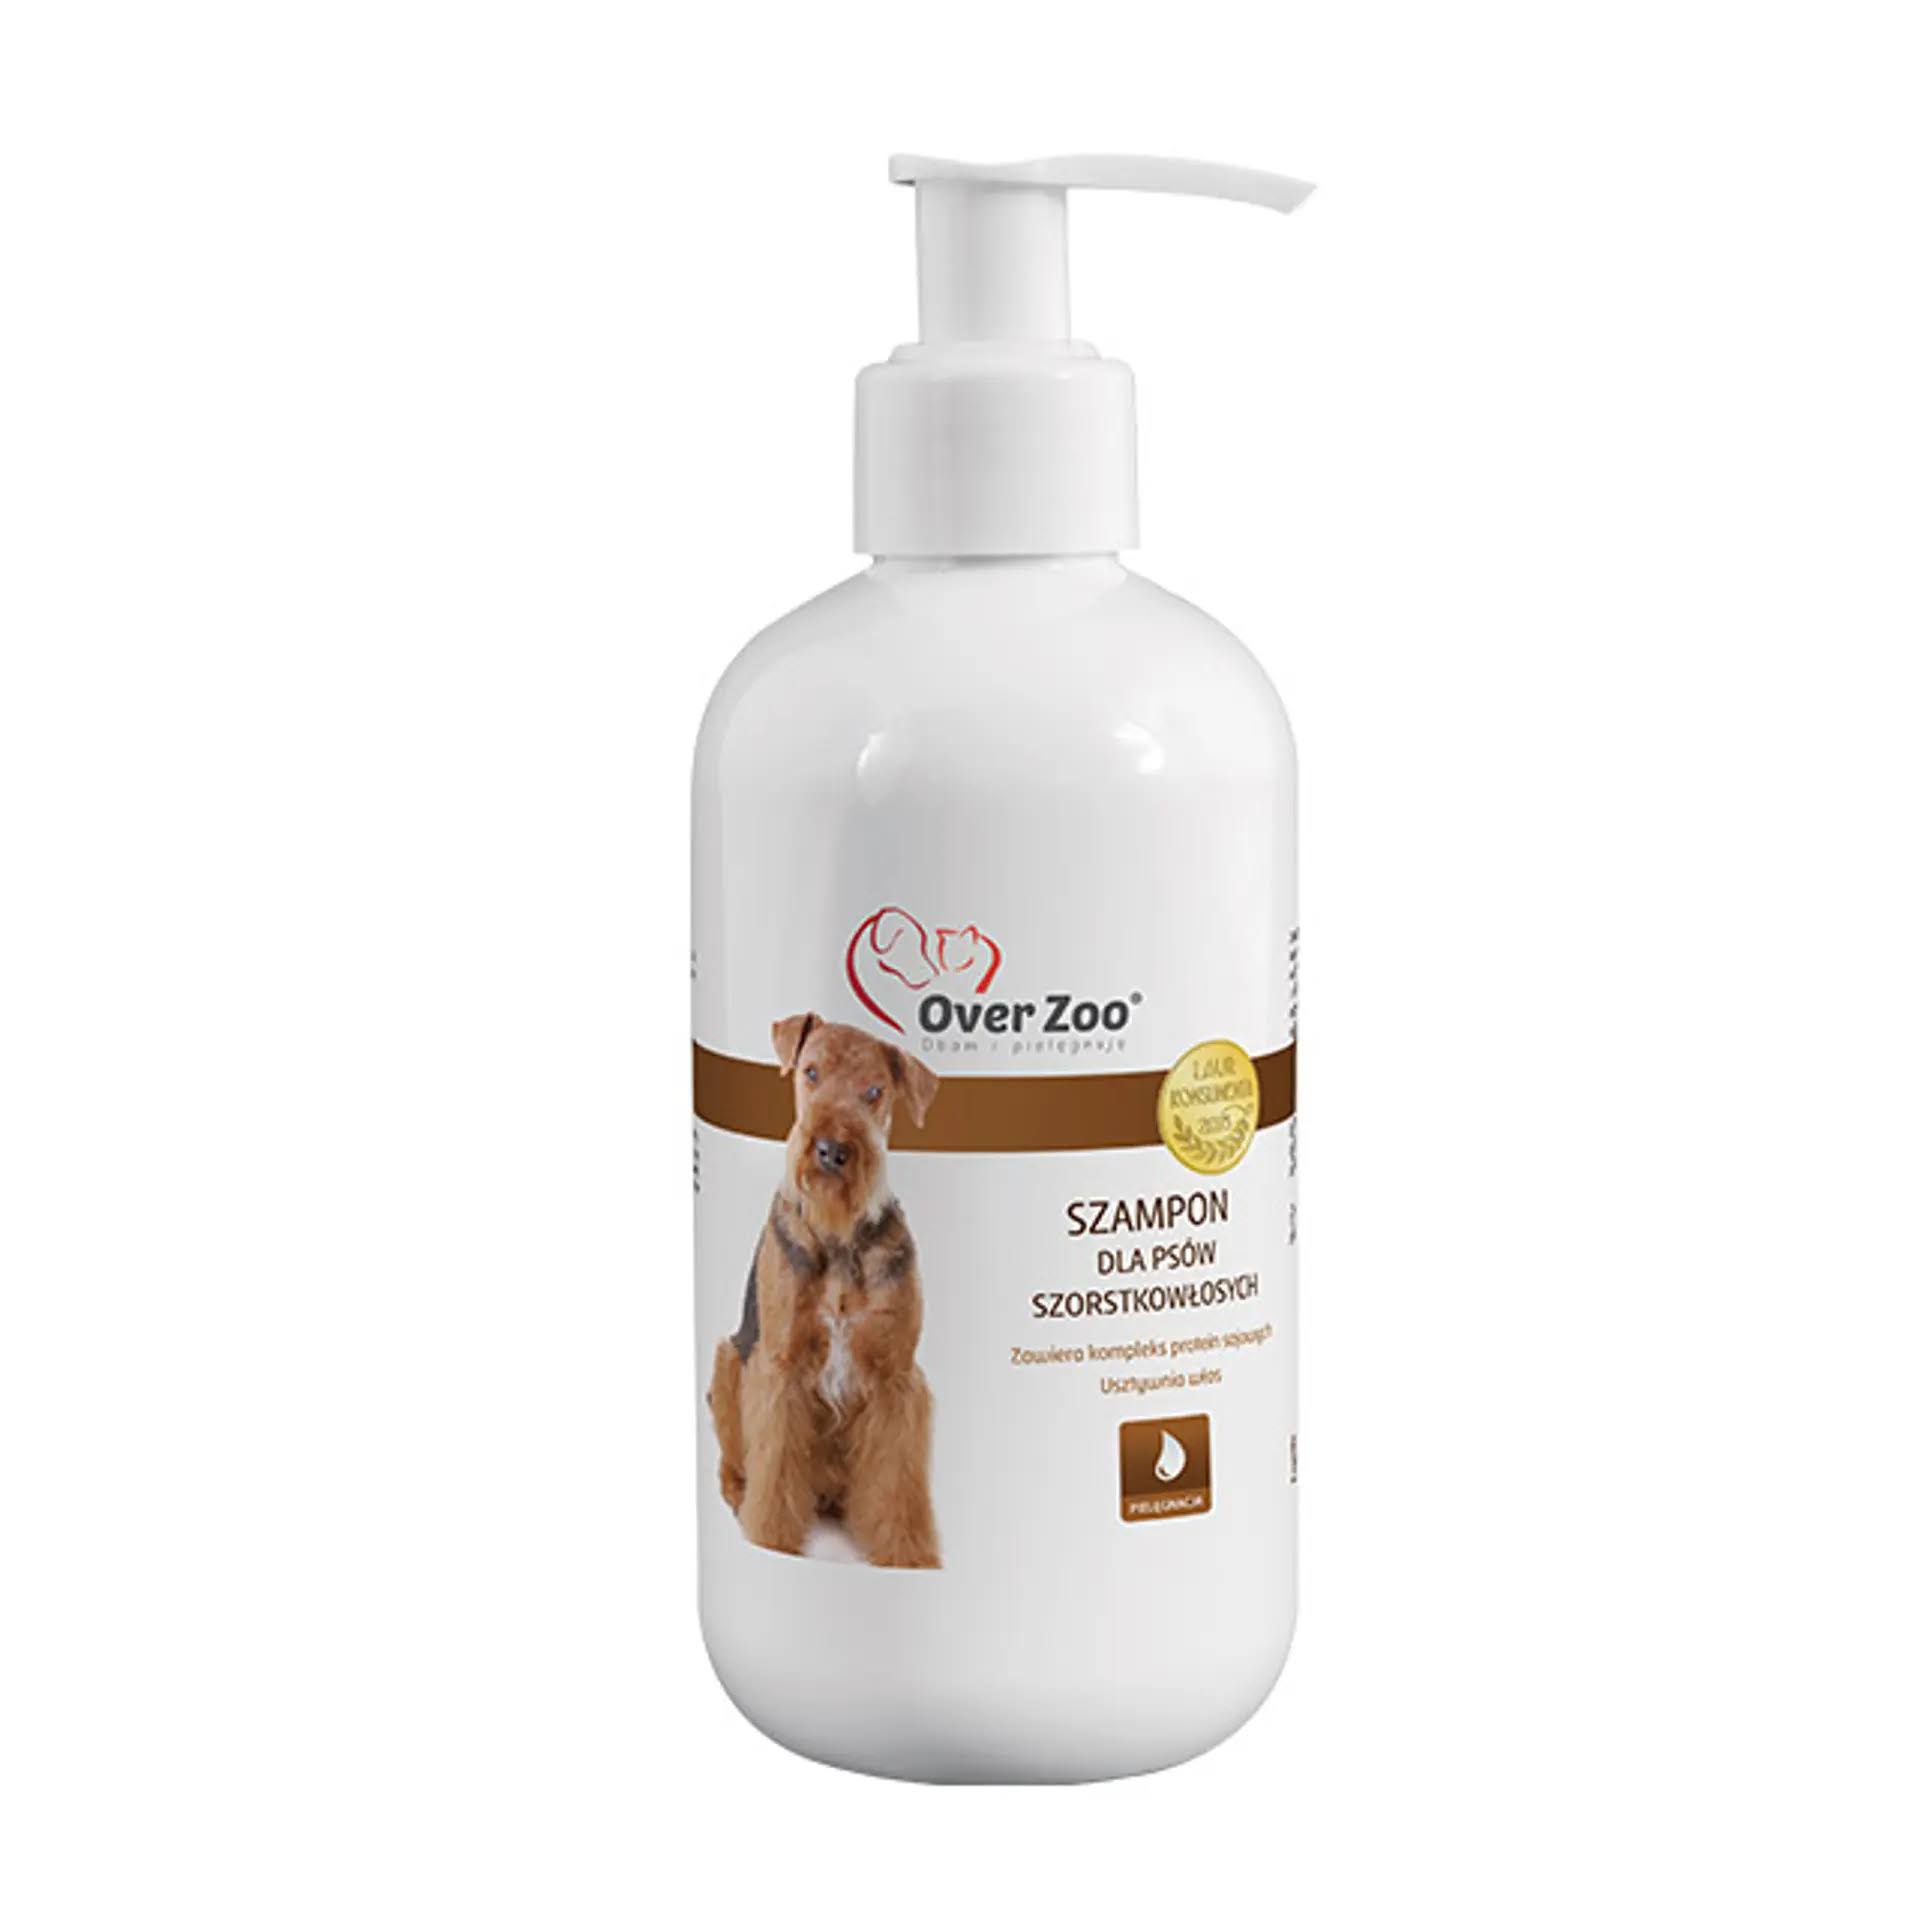 Dog shampoo for rough and dry fur